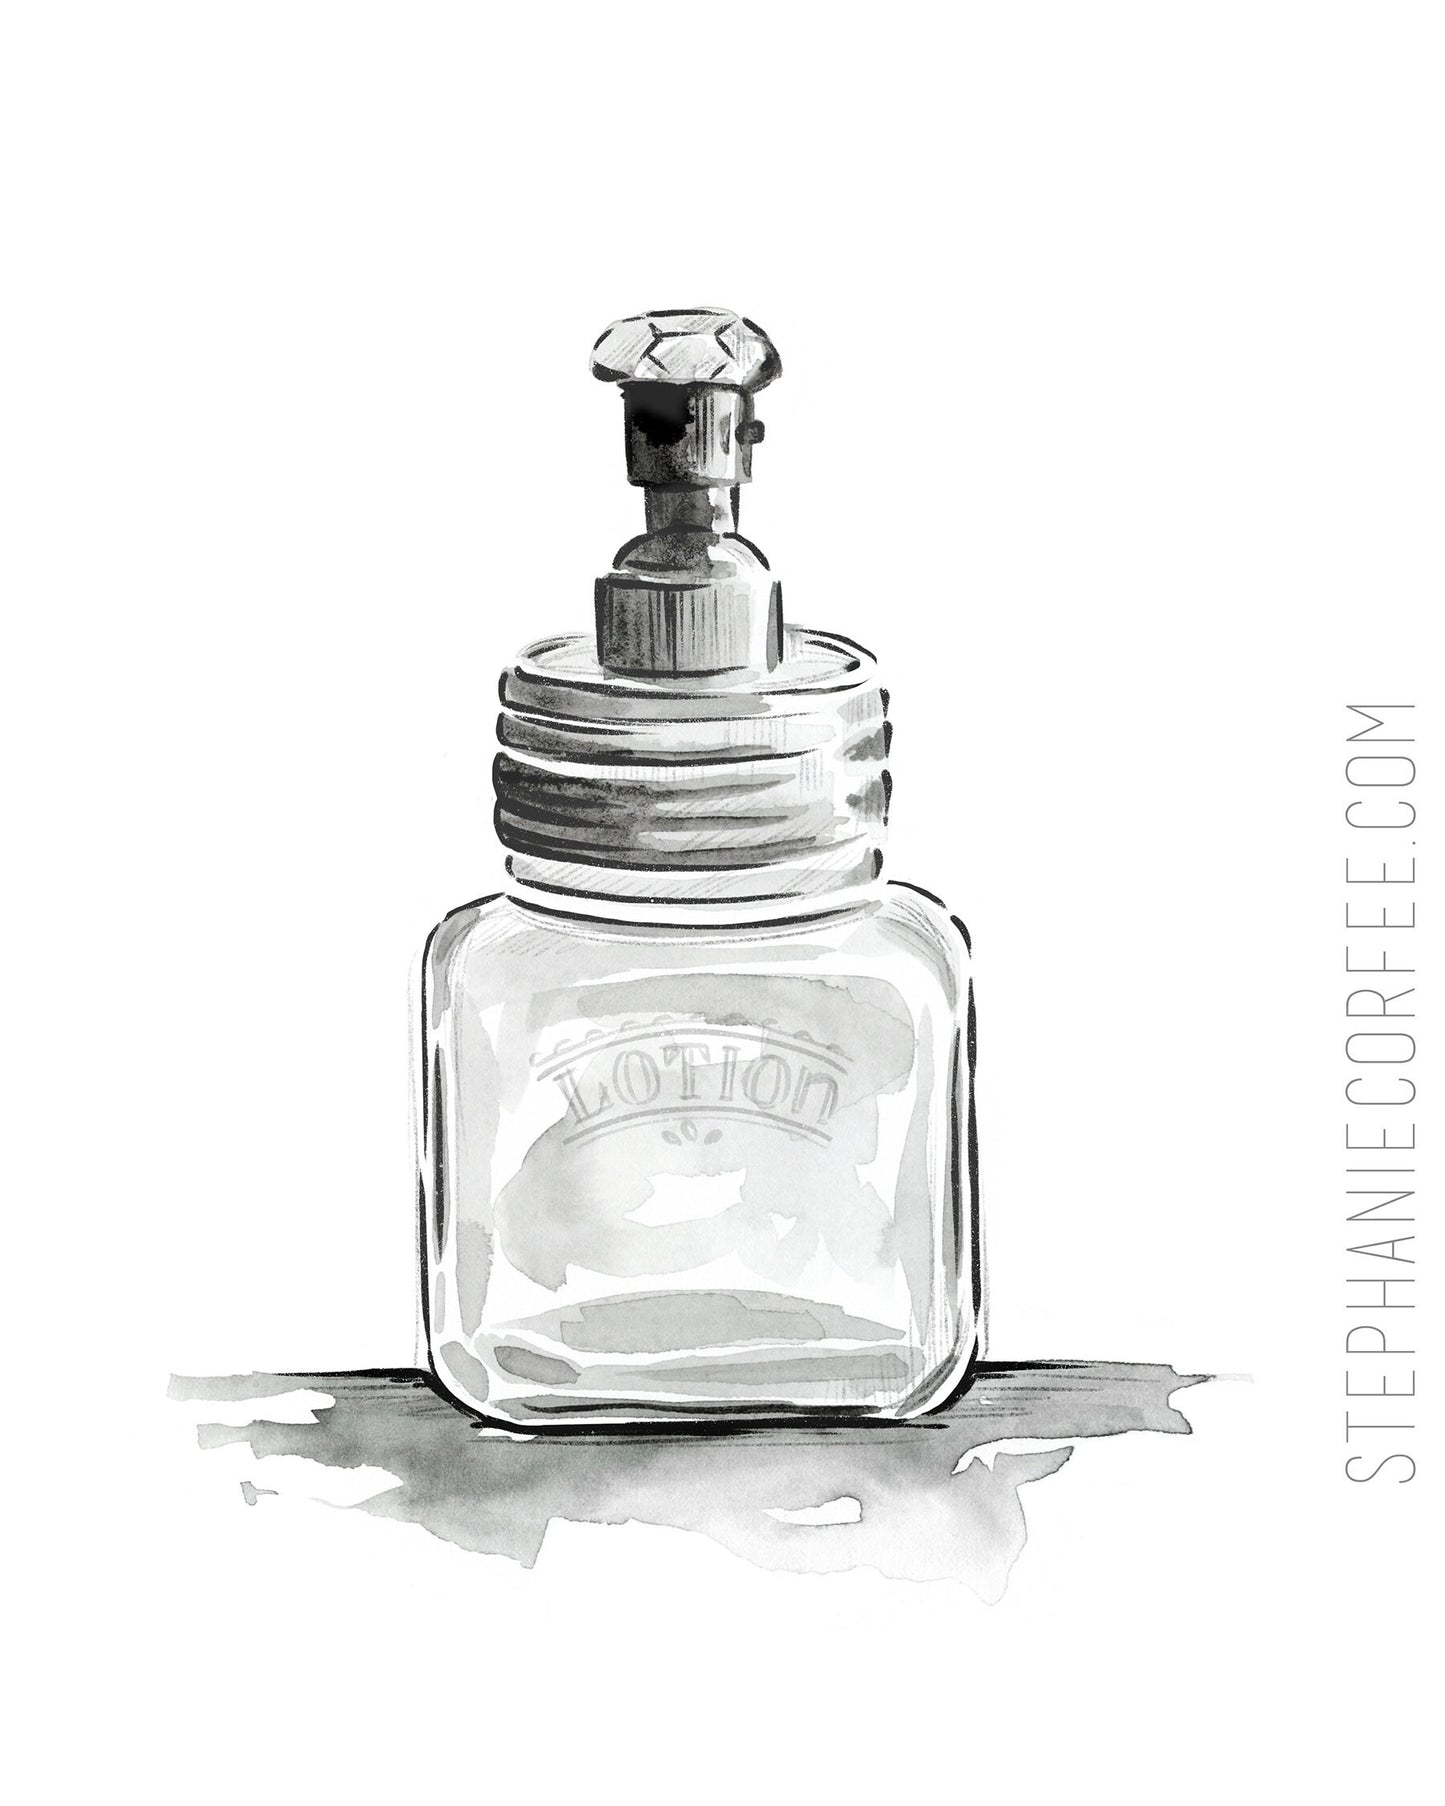 Sketchy Watercolor Lotion - PRINT, B&W, lotion, farmhouse style, simple, bathroom art, pump bottle